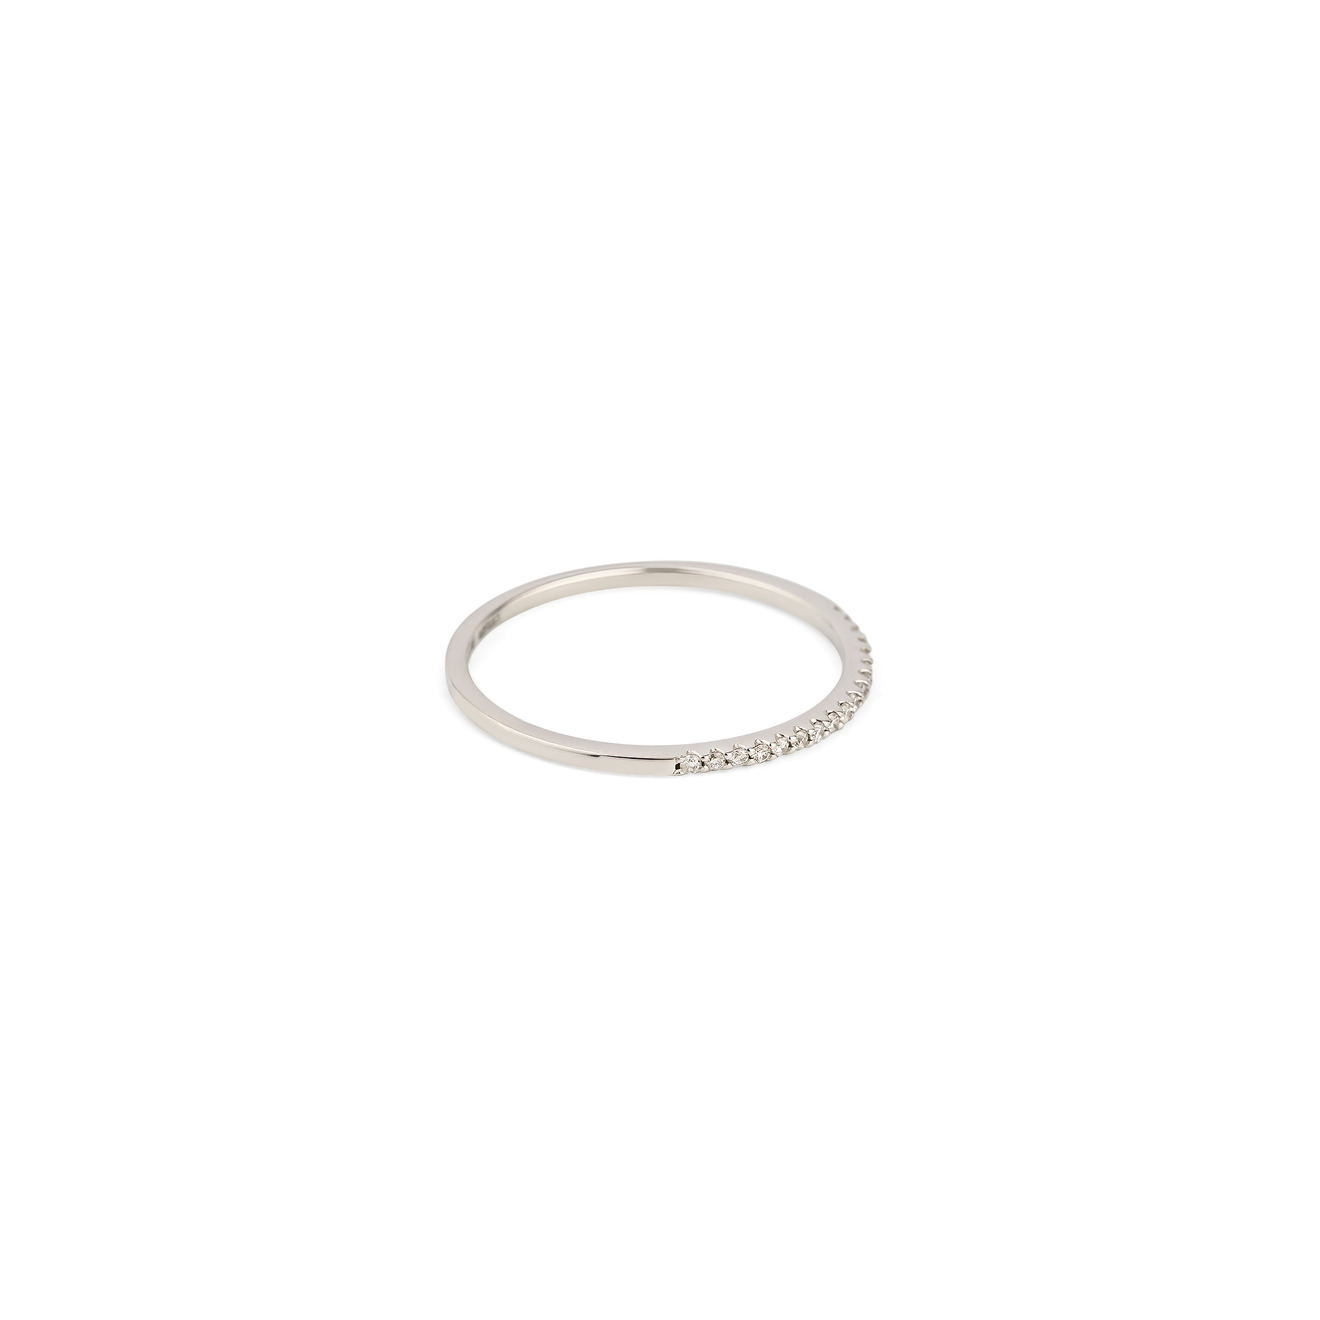 Moonka Кольцо-дорожка из золота с бриллиантами moonka кольцо из золота с вертикальным изумрудом и бриллиантами в асимметричной закрепке